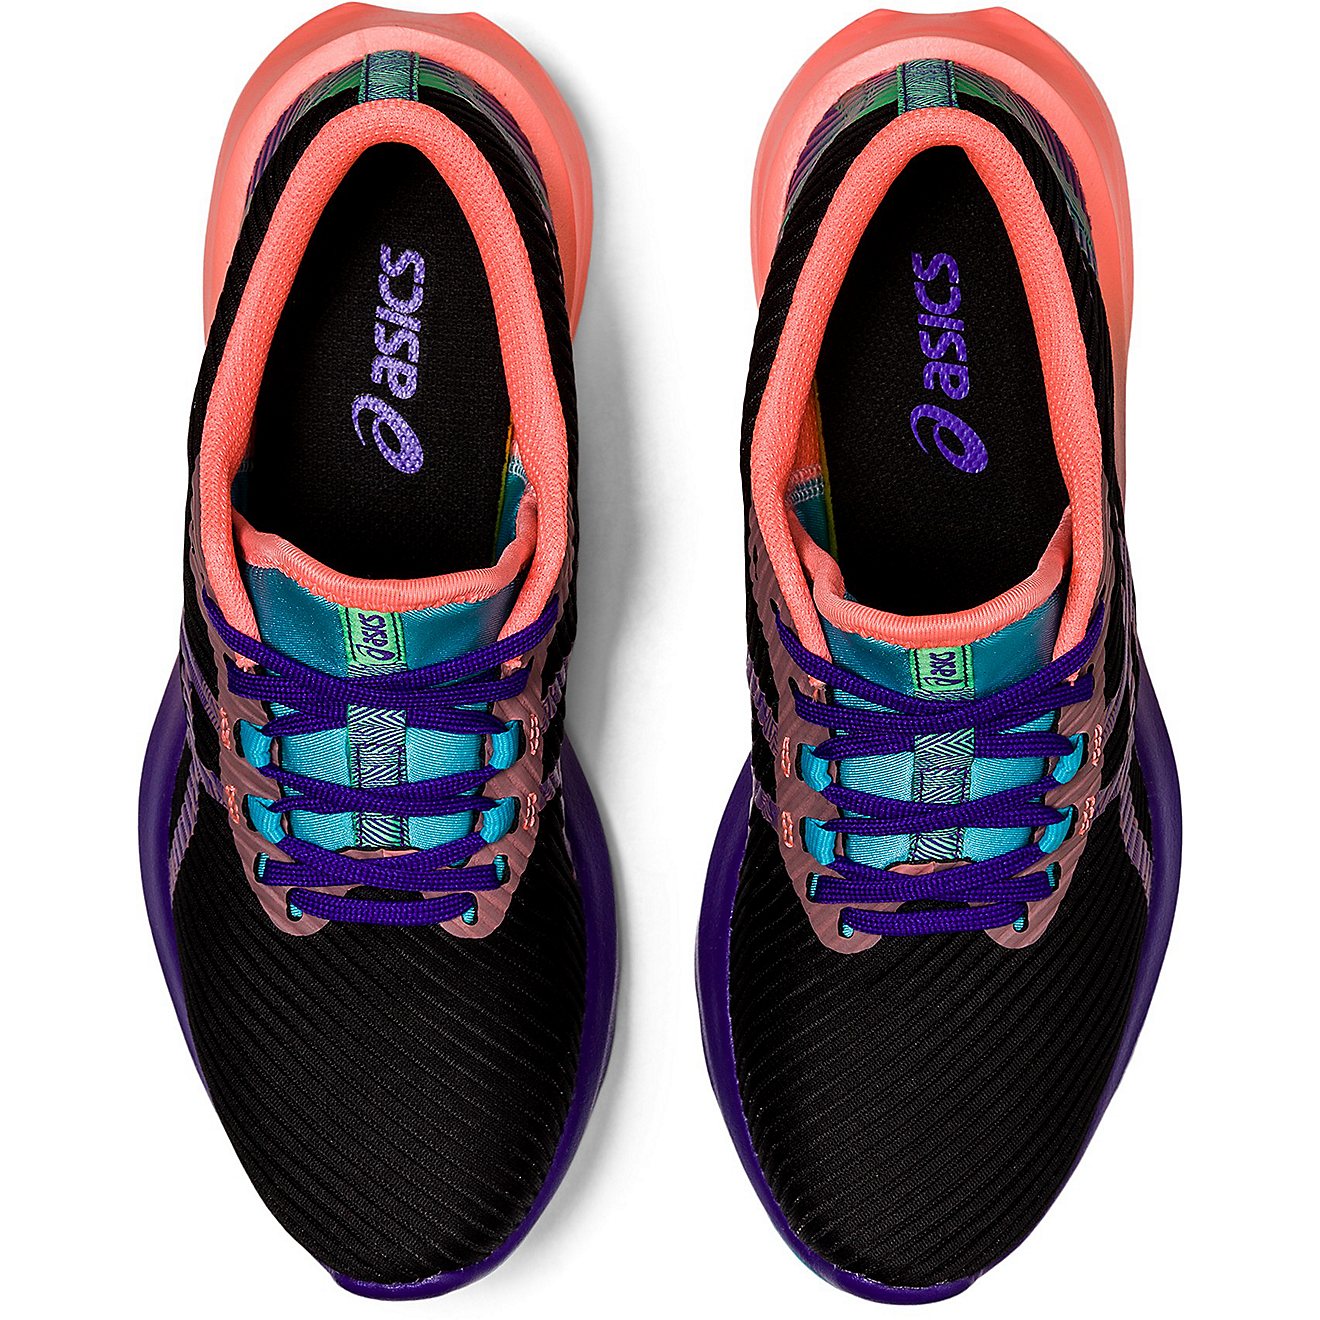 ASICS Women’s Versablast Run in Color 3.0 Running Shoes                                                                        - view number 5